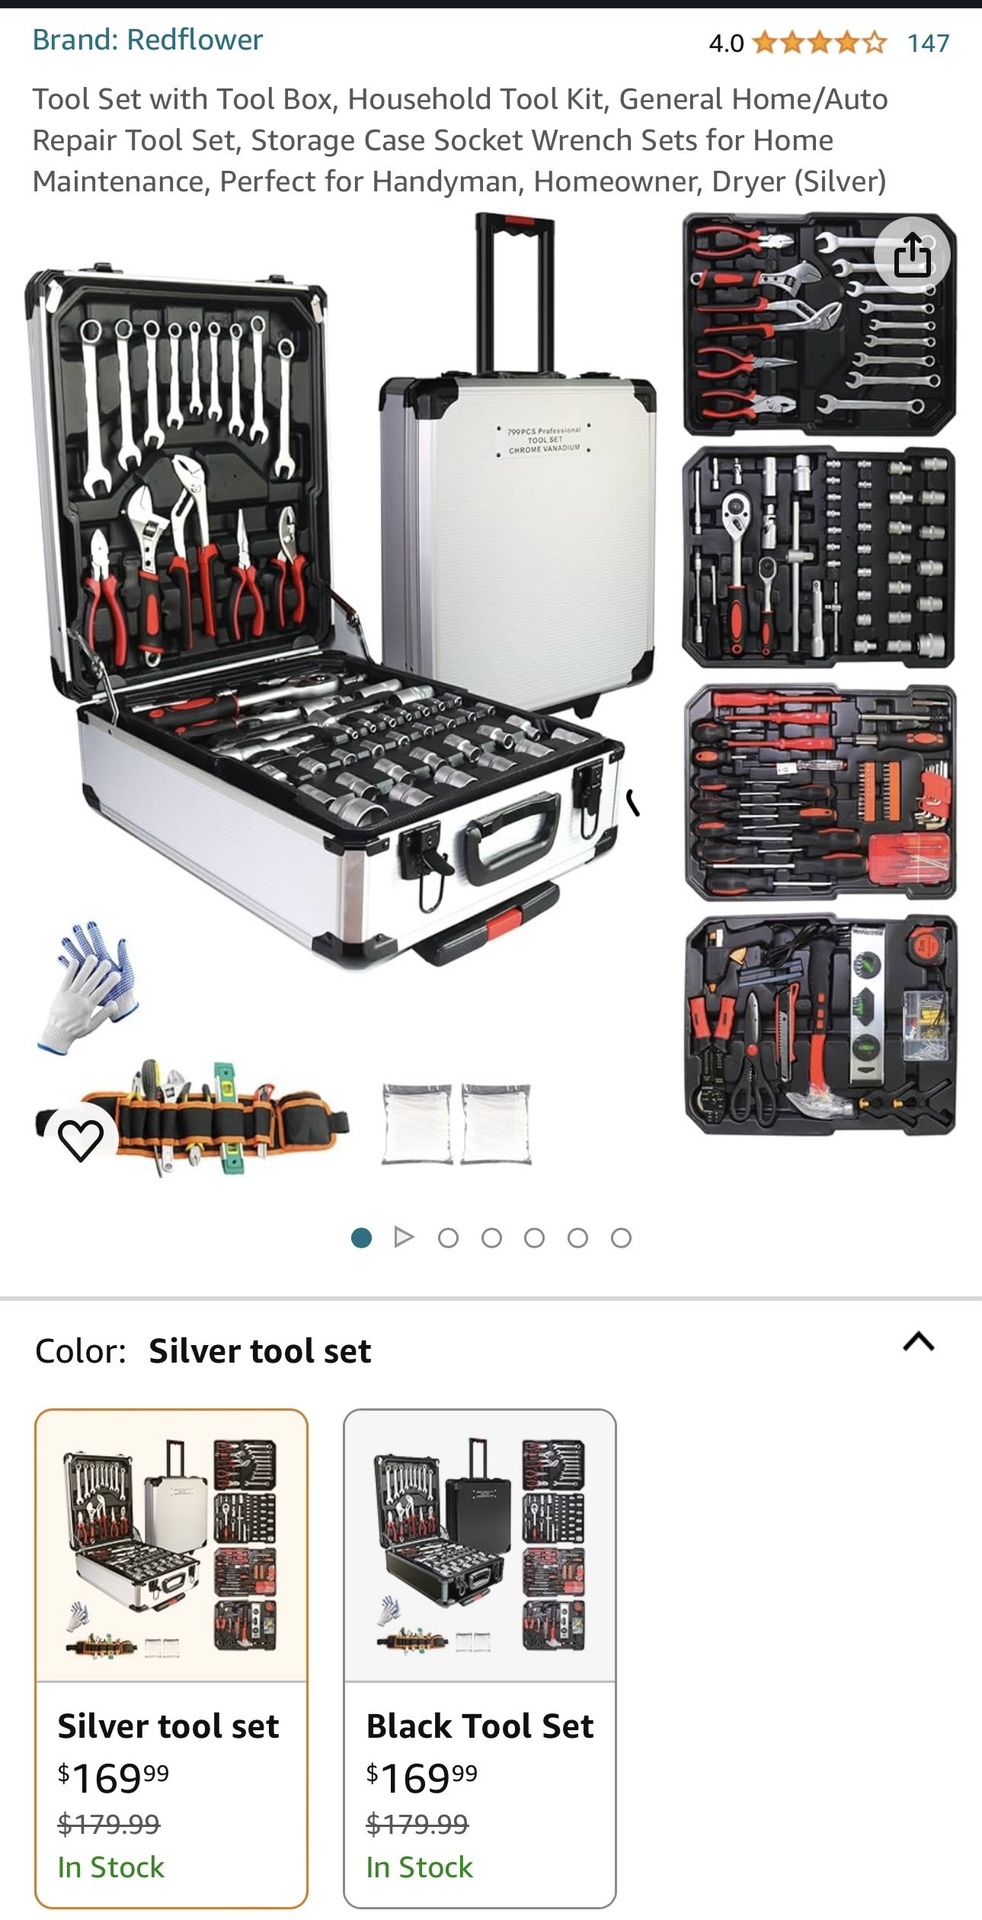 Tool Set with Tool Box, Household Tool Kit